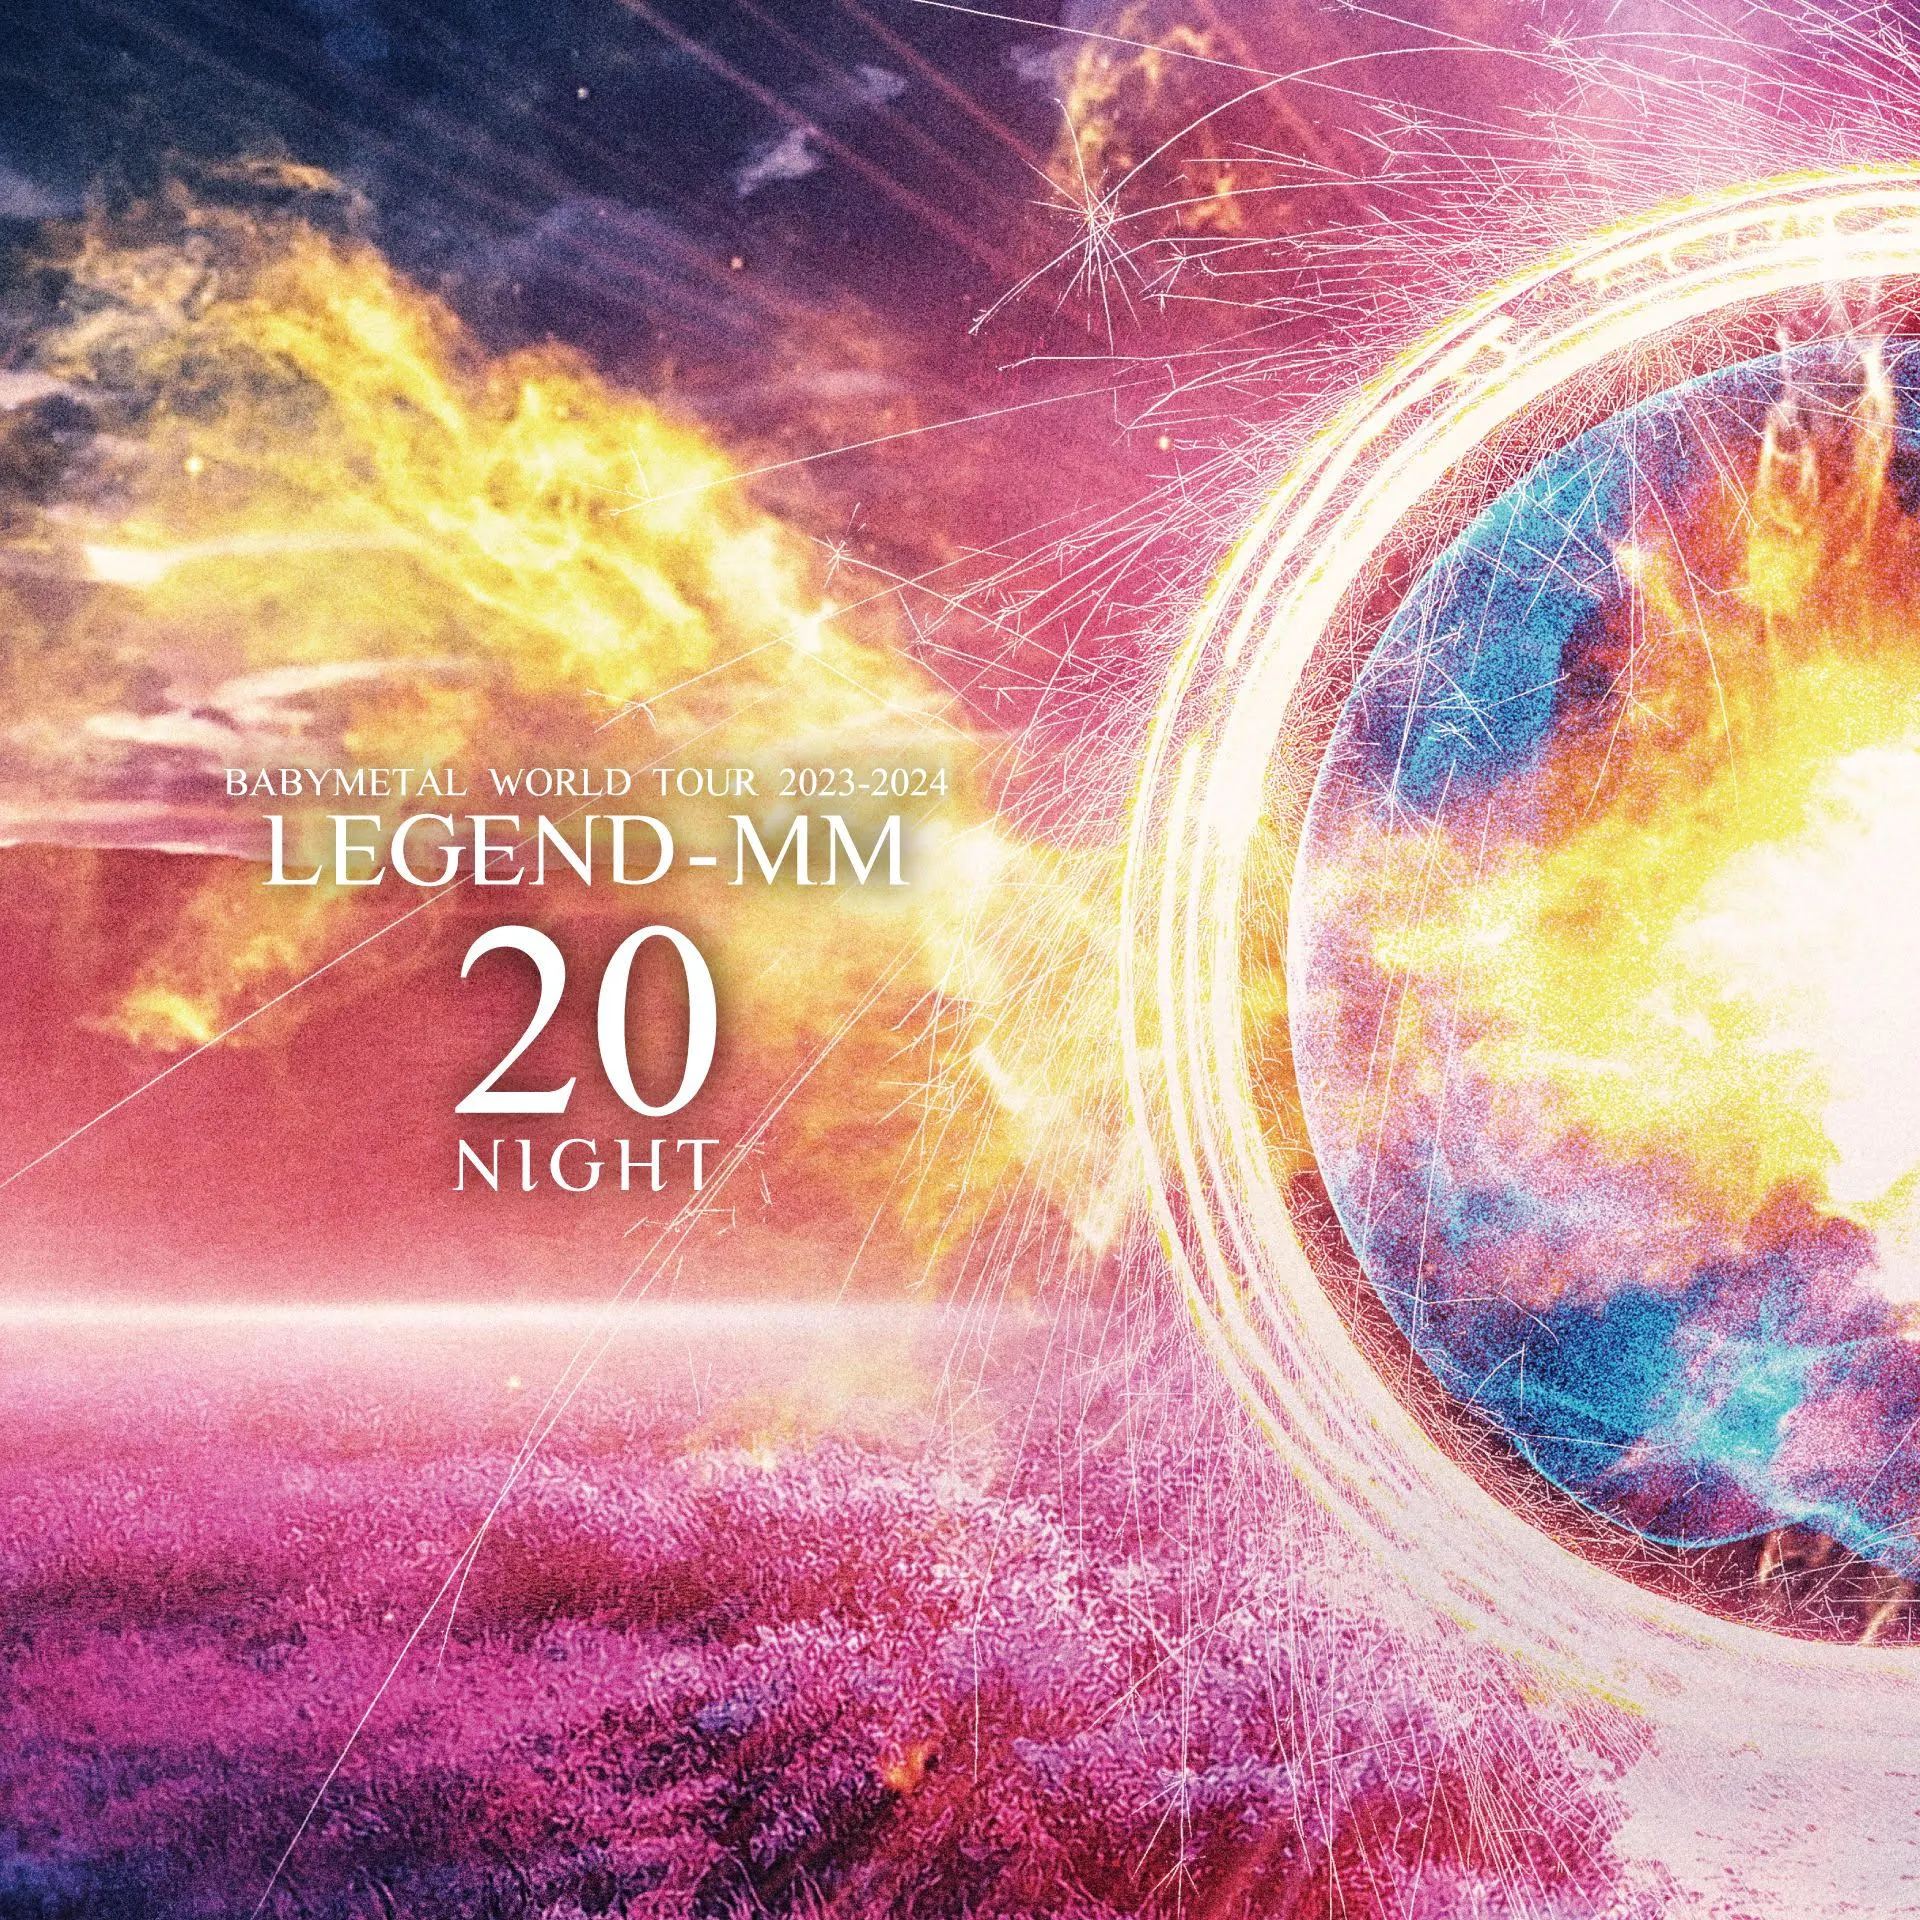 BABYMETAL / BABYMETAL WORLD TOUR 2023 - 2024 LEGEND - MM 20 NIGHT